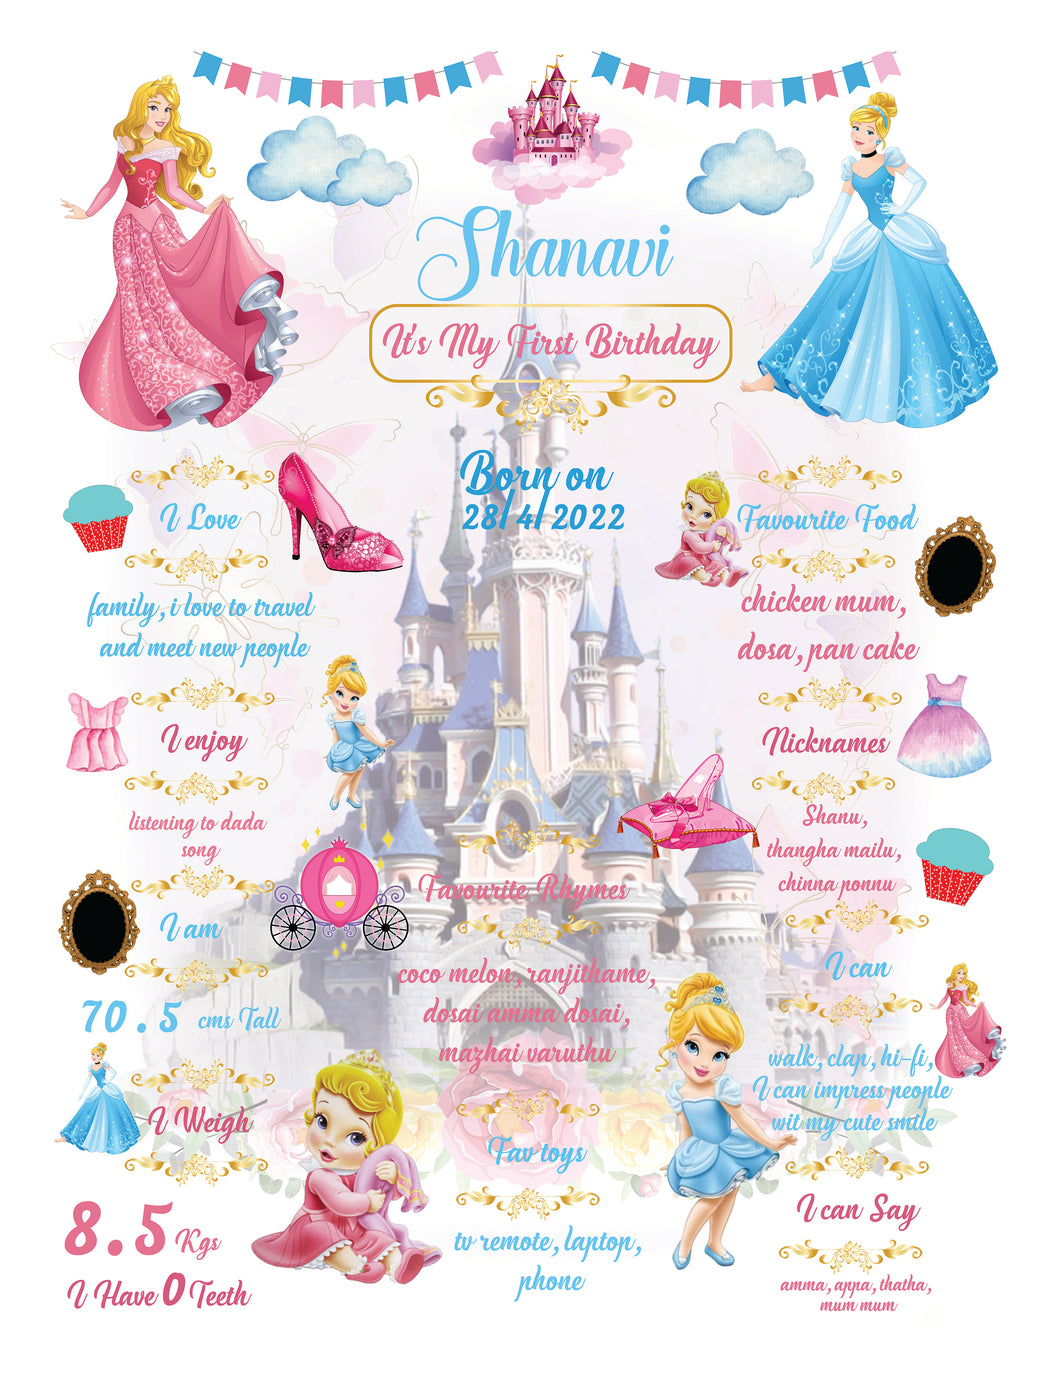 Snow Fair - Disney Princess Theme Customized Chalkboard / Milestone Board for Kids Birthday Party - Made of MDF Wooden Board